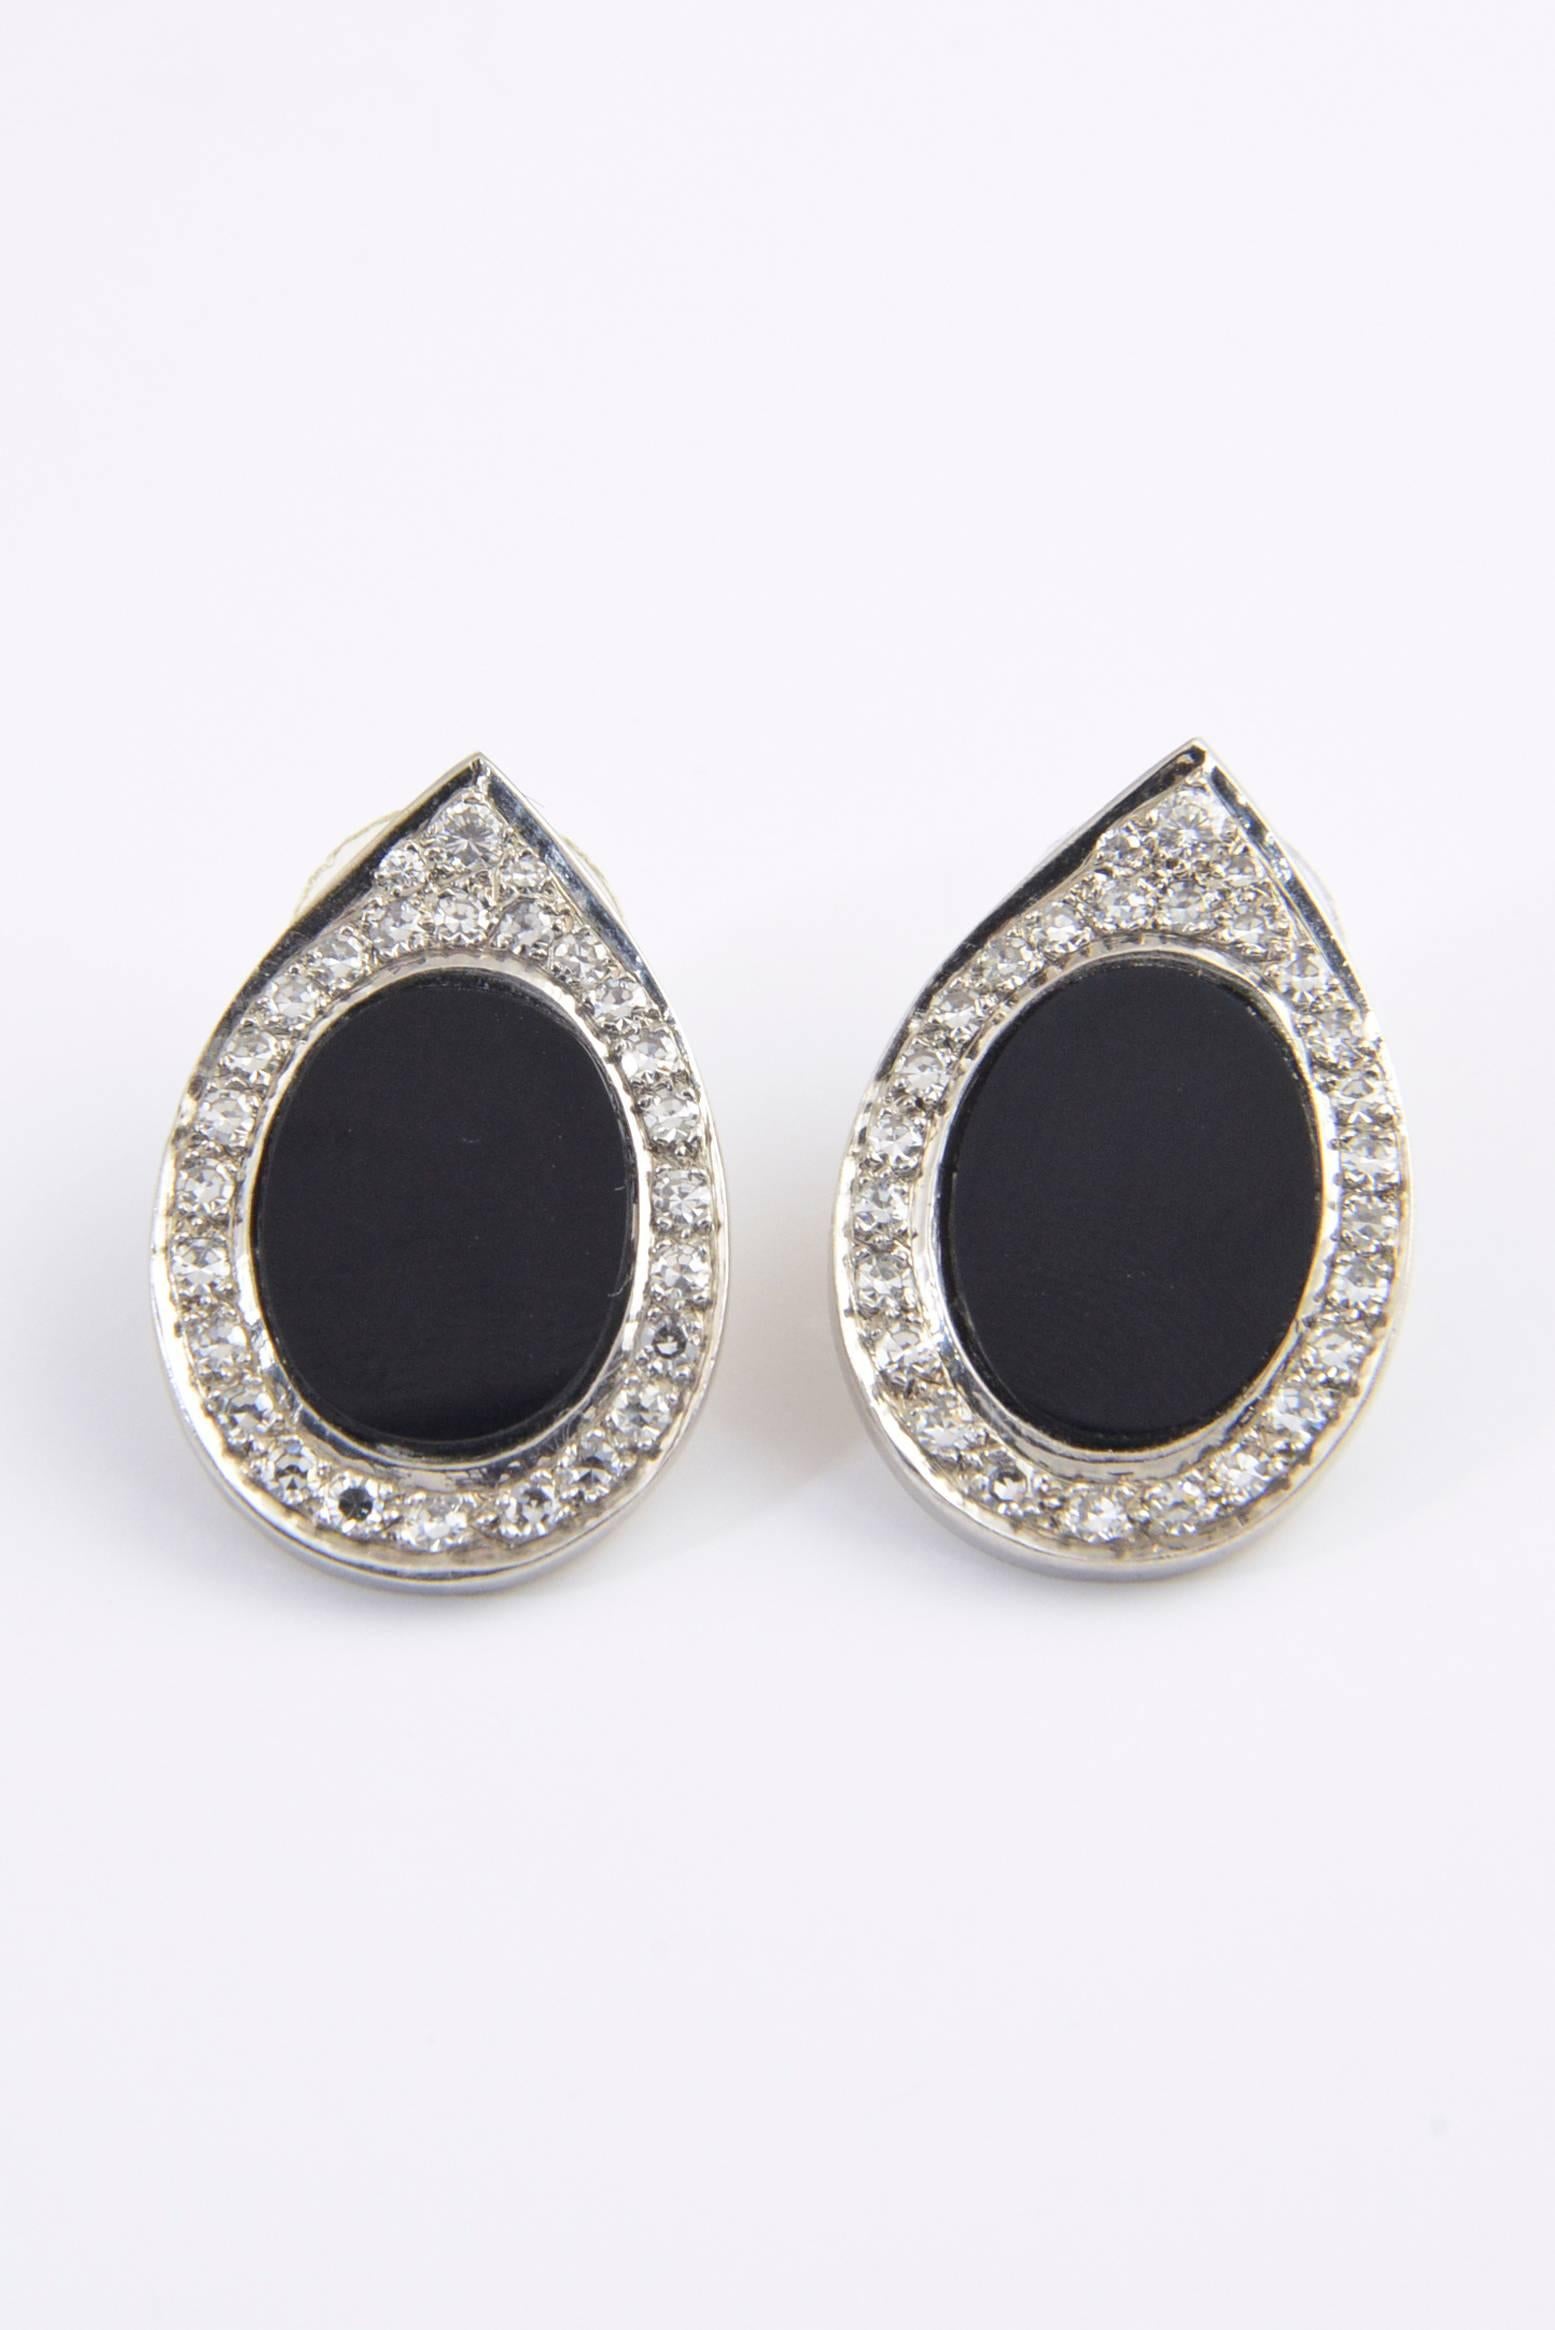 Women's Onyx and Diamond Platinum Teardrop Earrings, circa 1970s For Sale